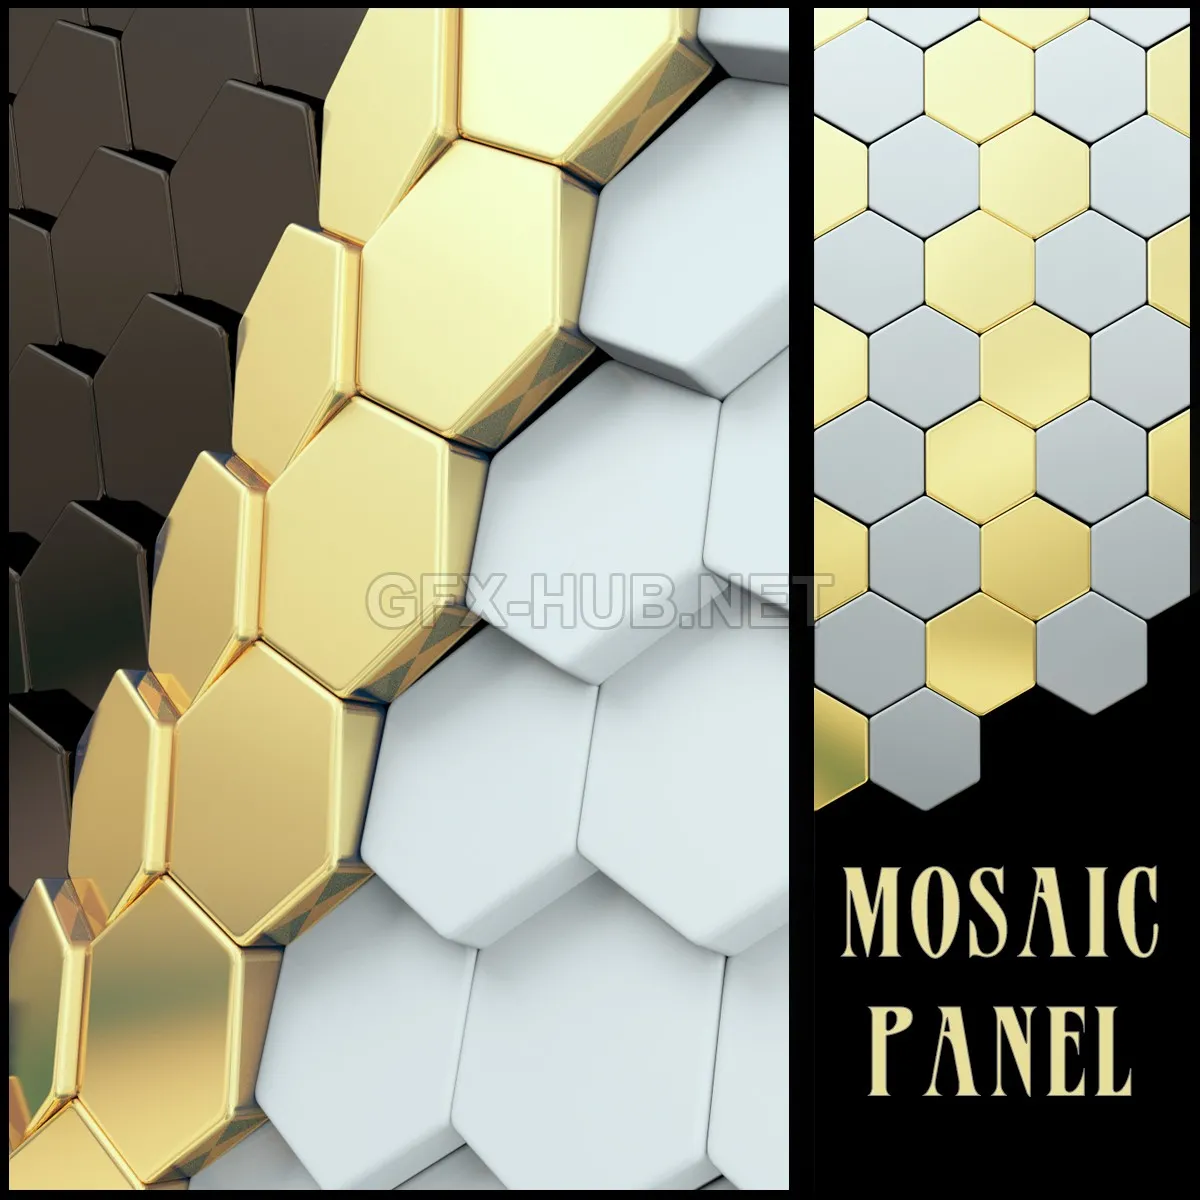 FURNITURE 3D MODELS – Mosaic panel